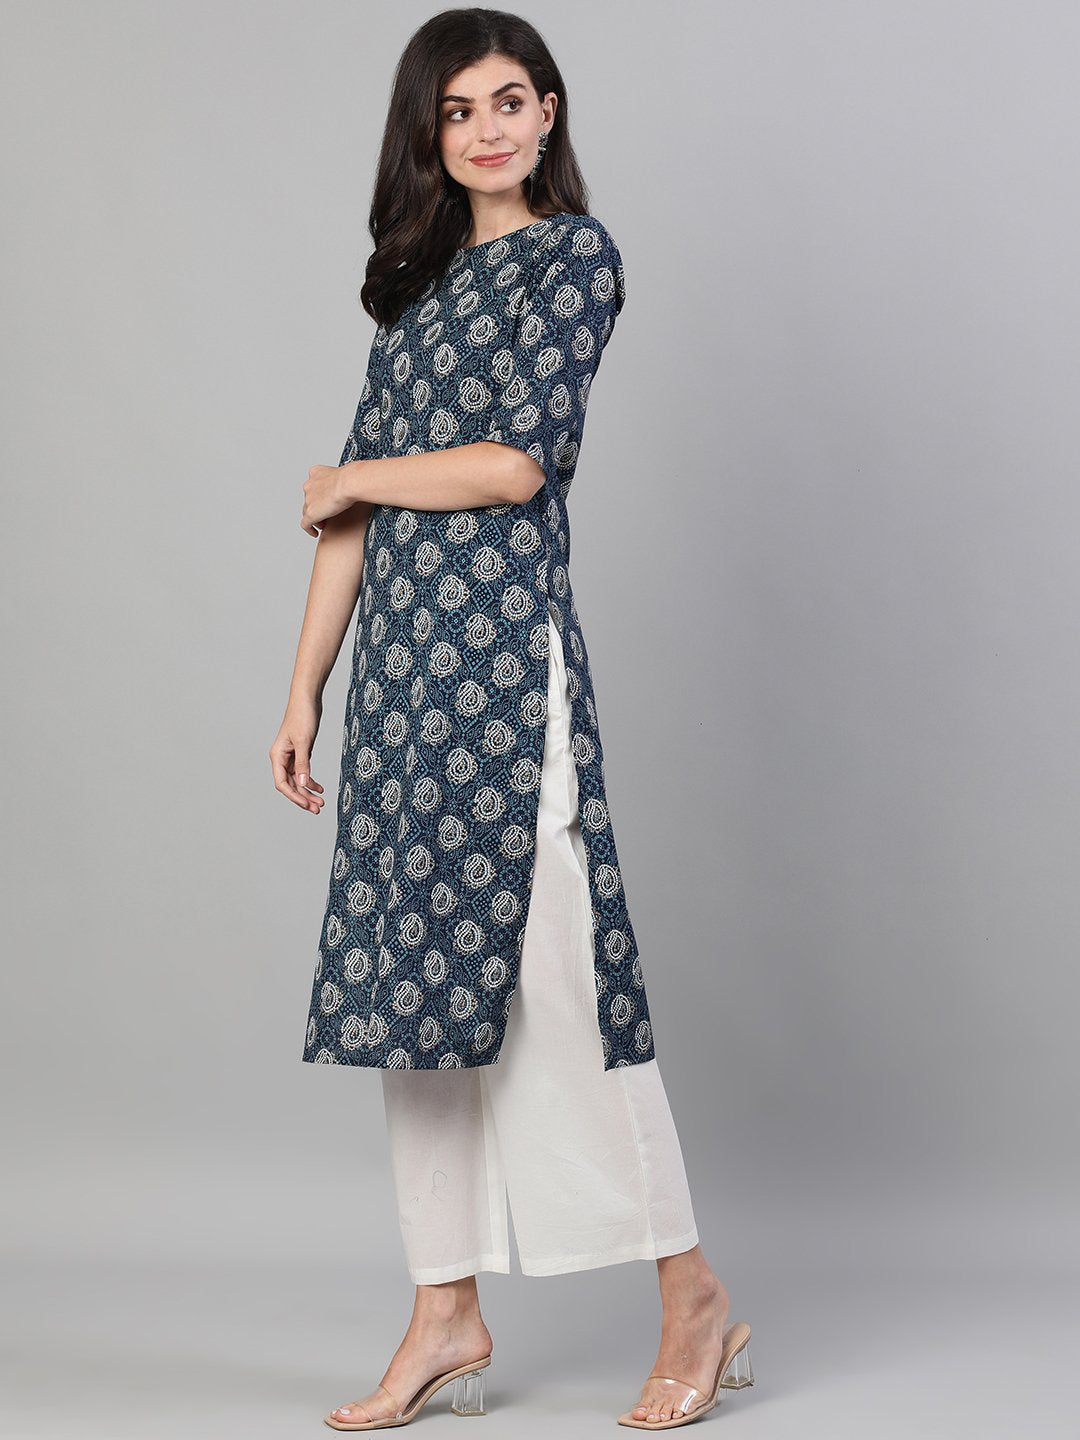 Women's Blue Calf Length Three-Quarter Sleeves Straight Bandhani Printed Cotton Kurta With Pockets And Face Mask - Nayo Clothing